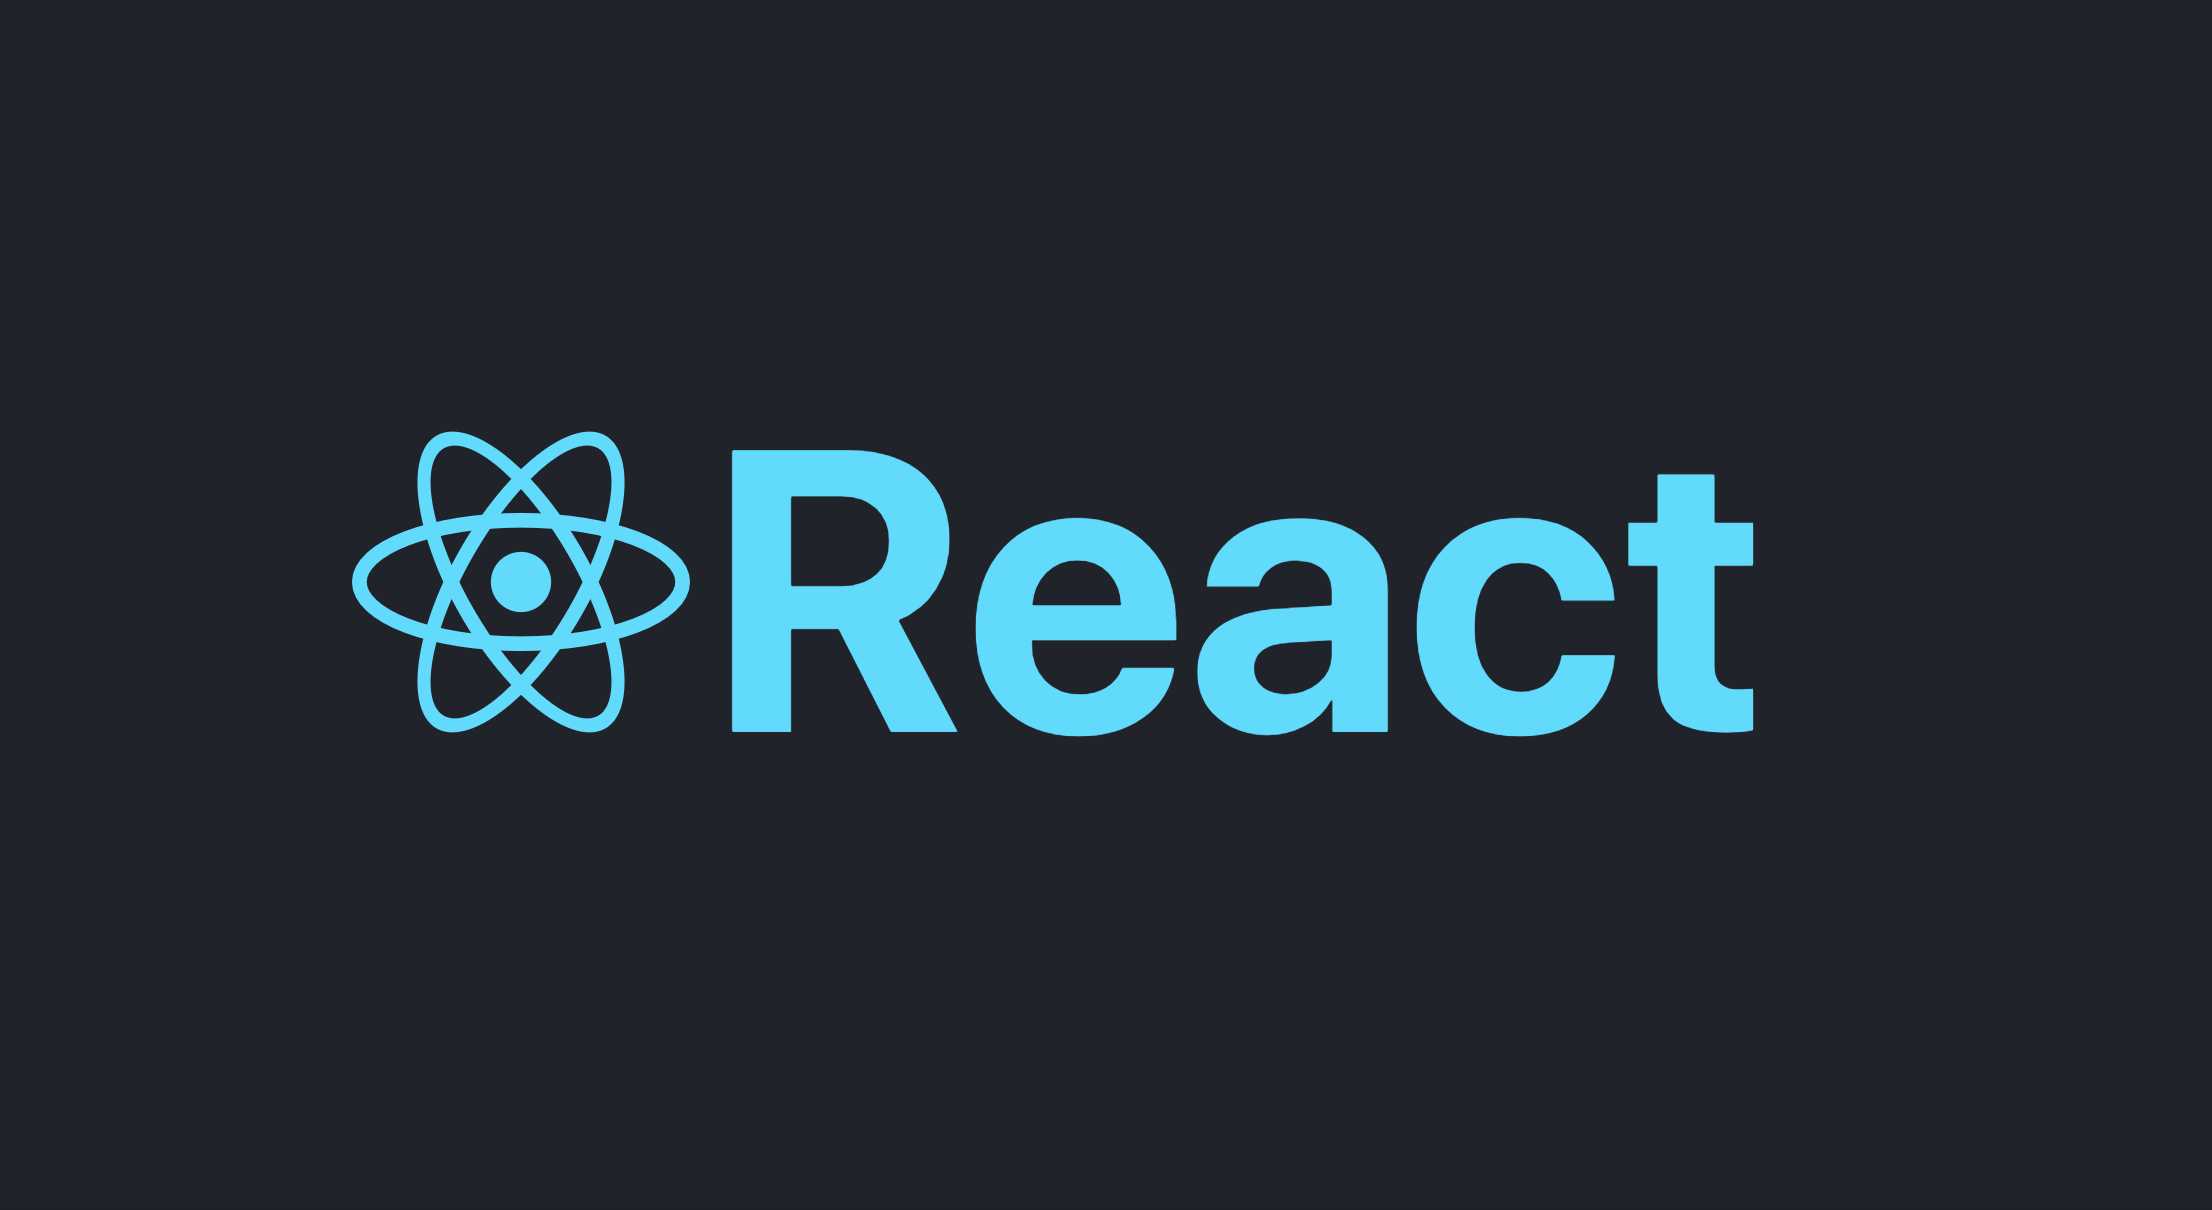 Development on React.js